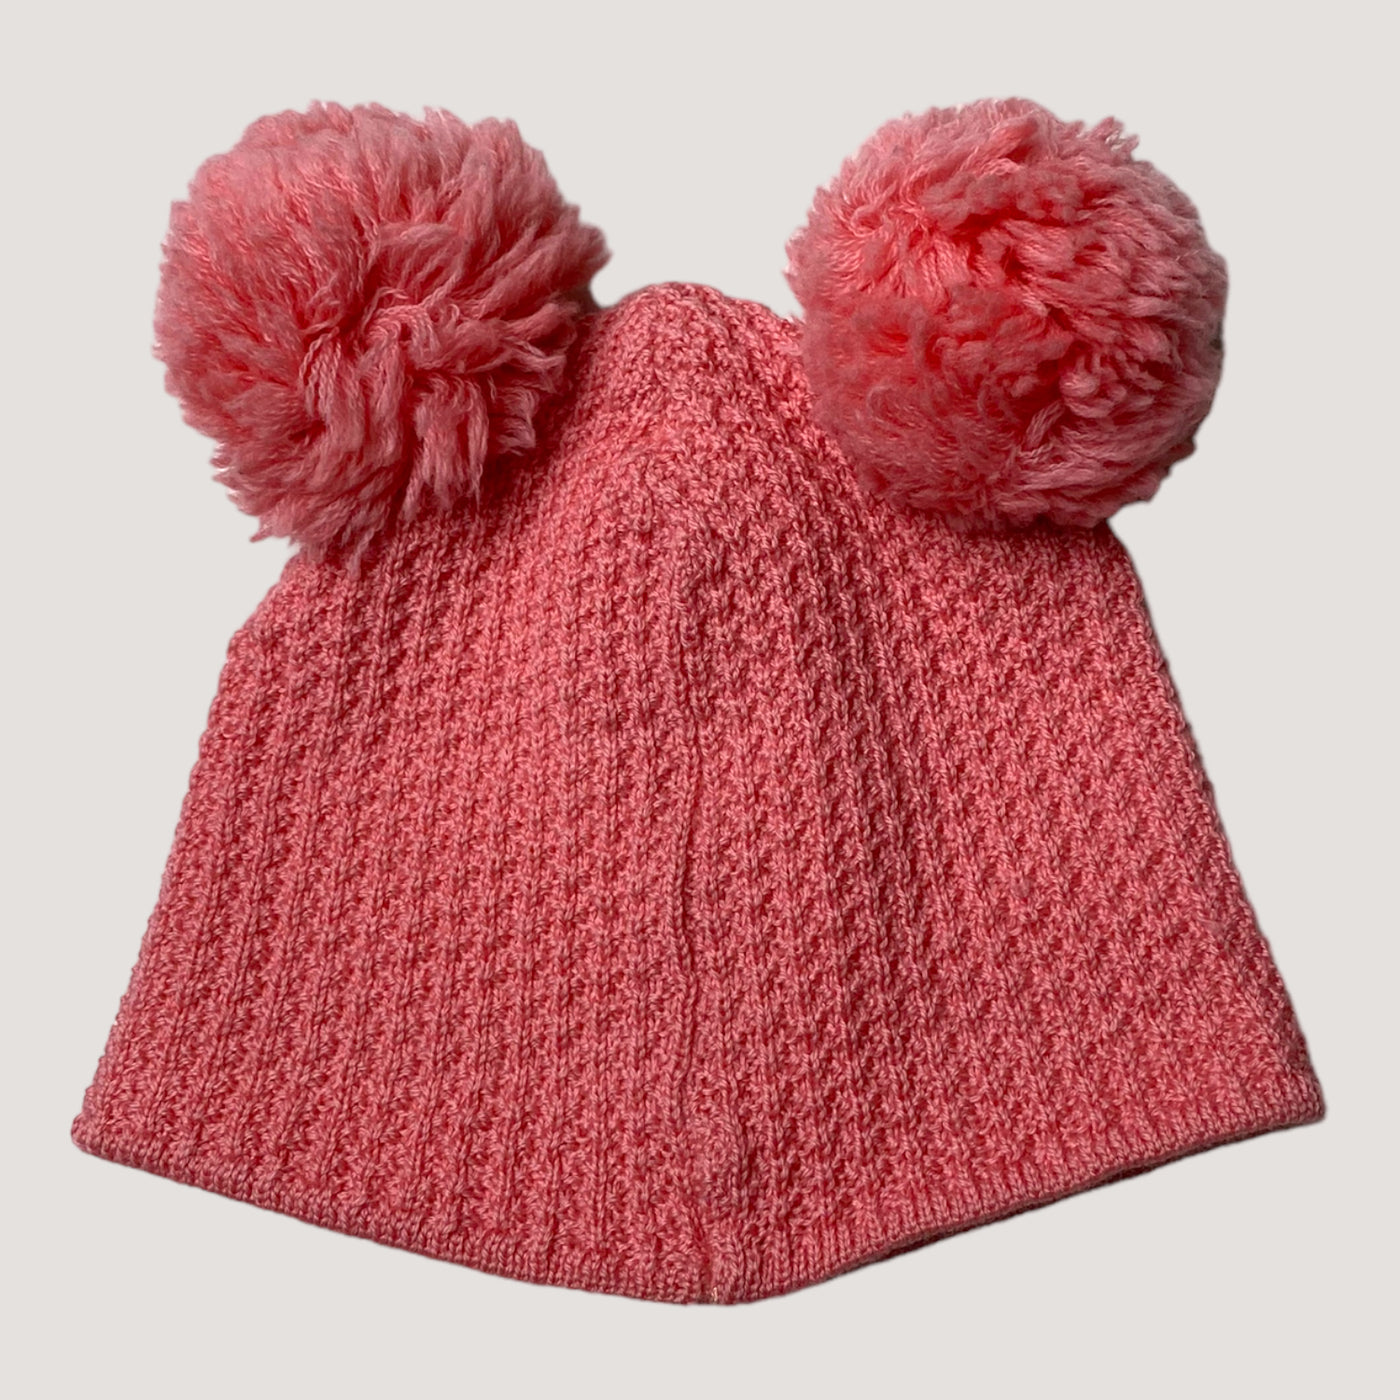 Gugguu merino wool pom beanie, coral pink | 50/51cm